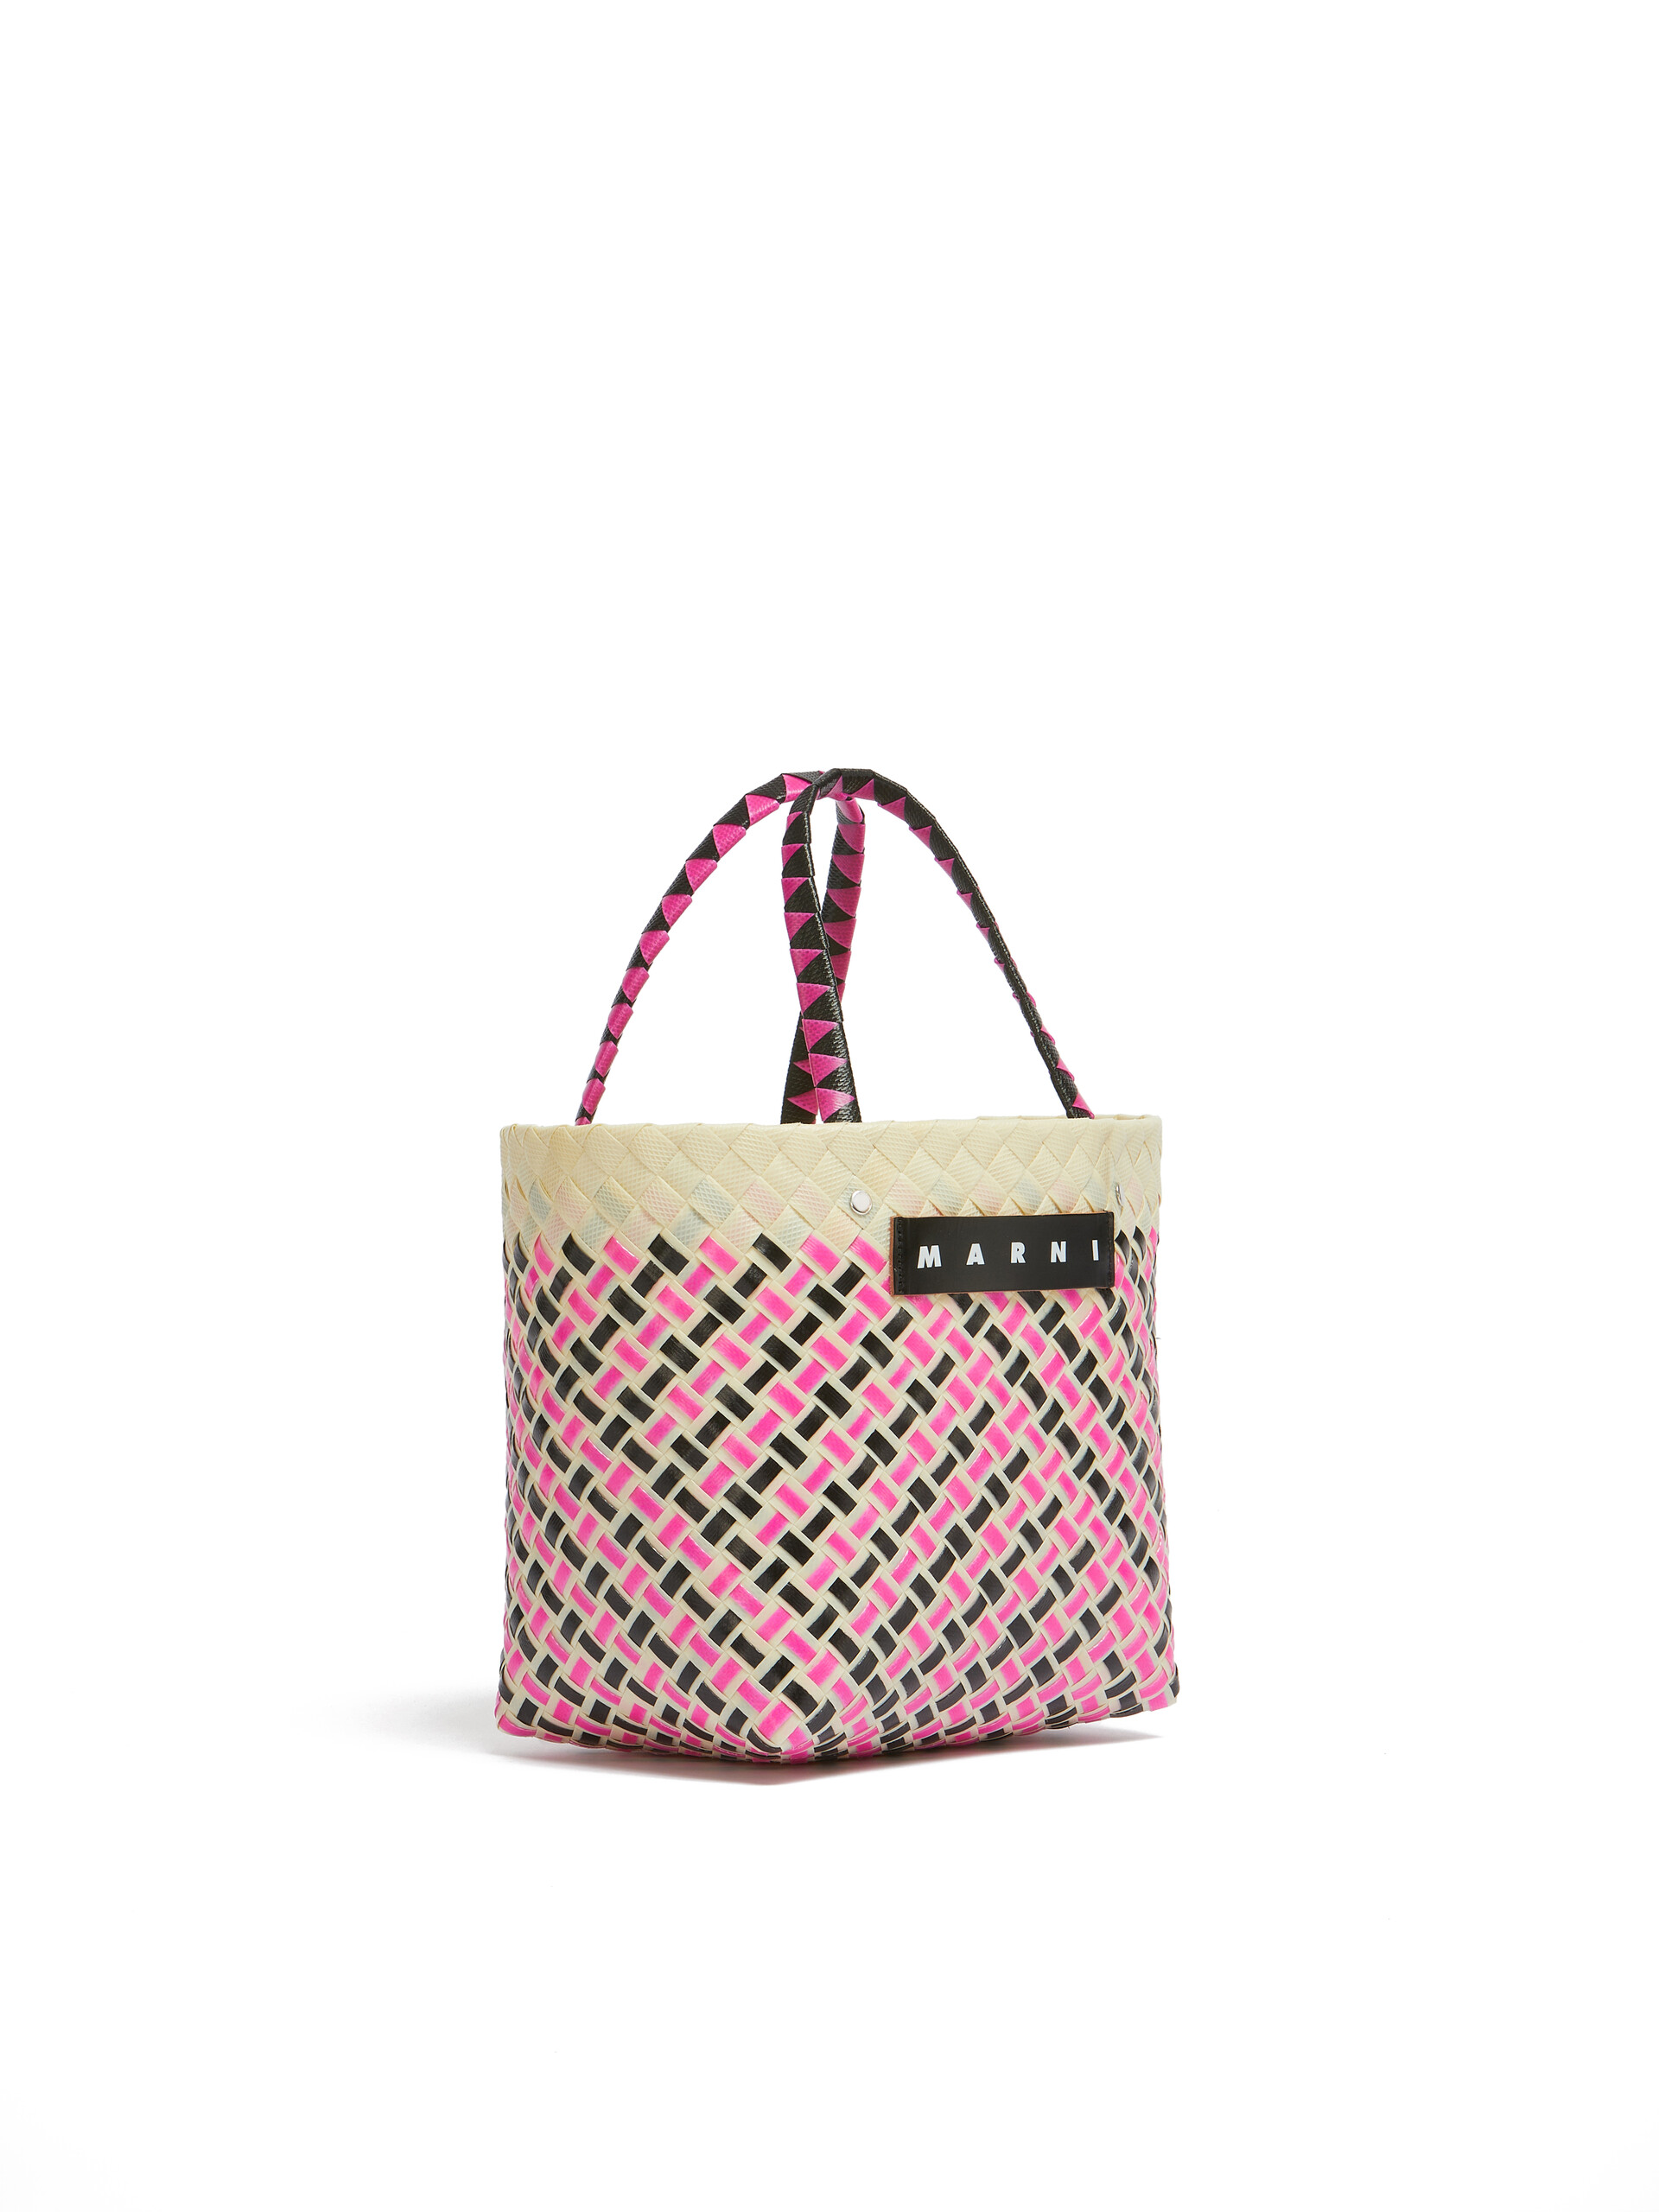 Black outline MARNI MARKET MEDIUM BASKET bag - Shopping Bags - Image 2